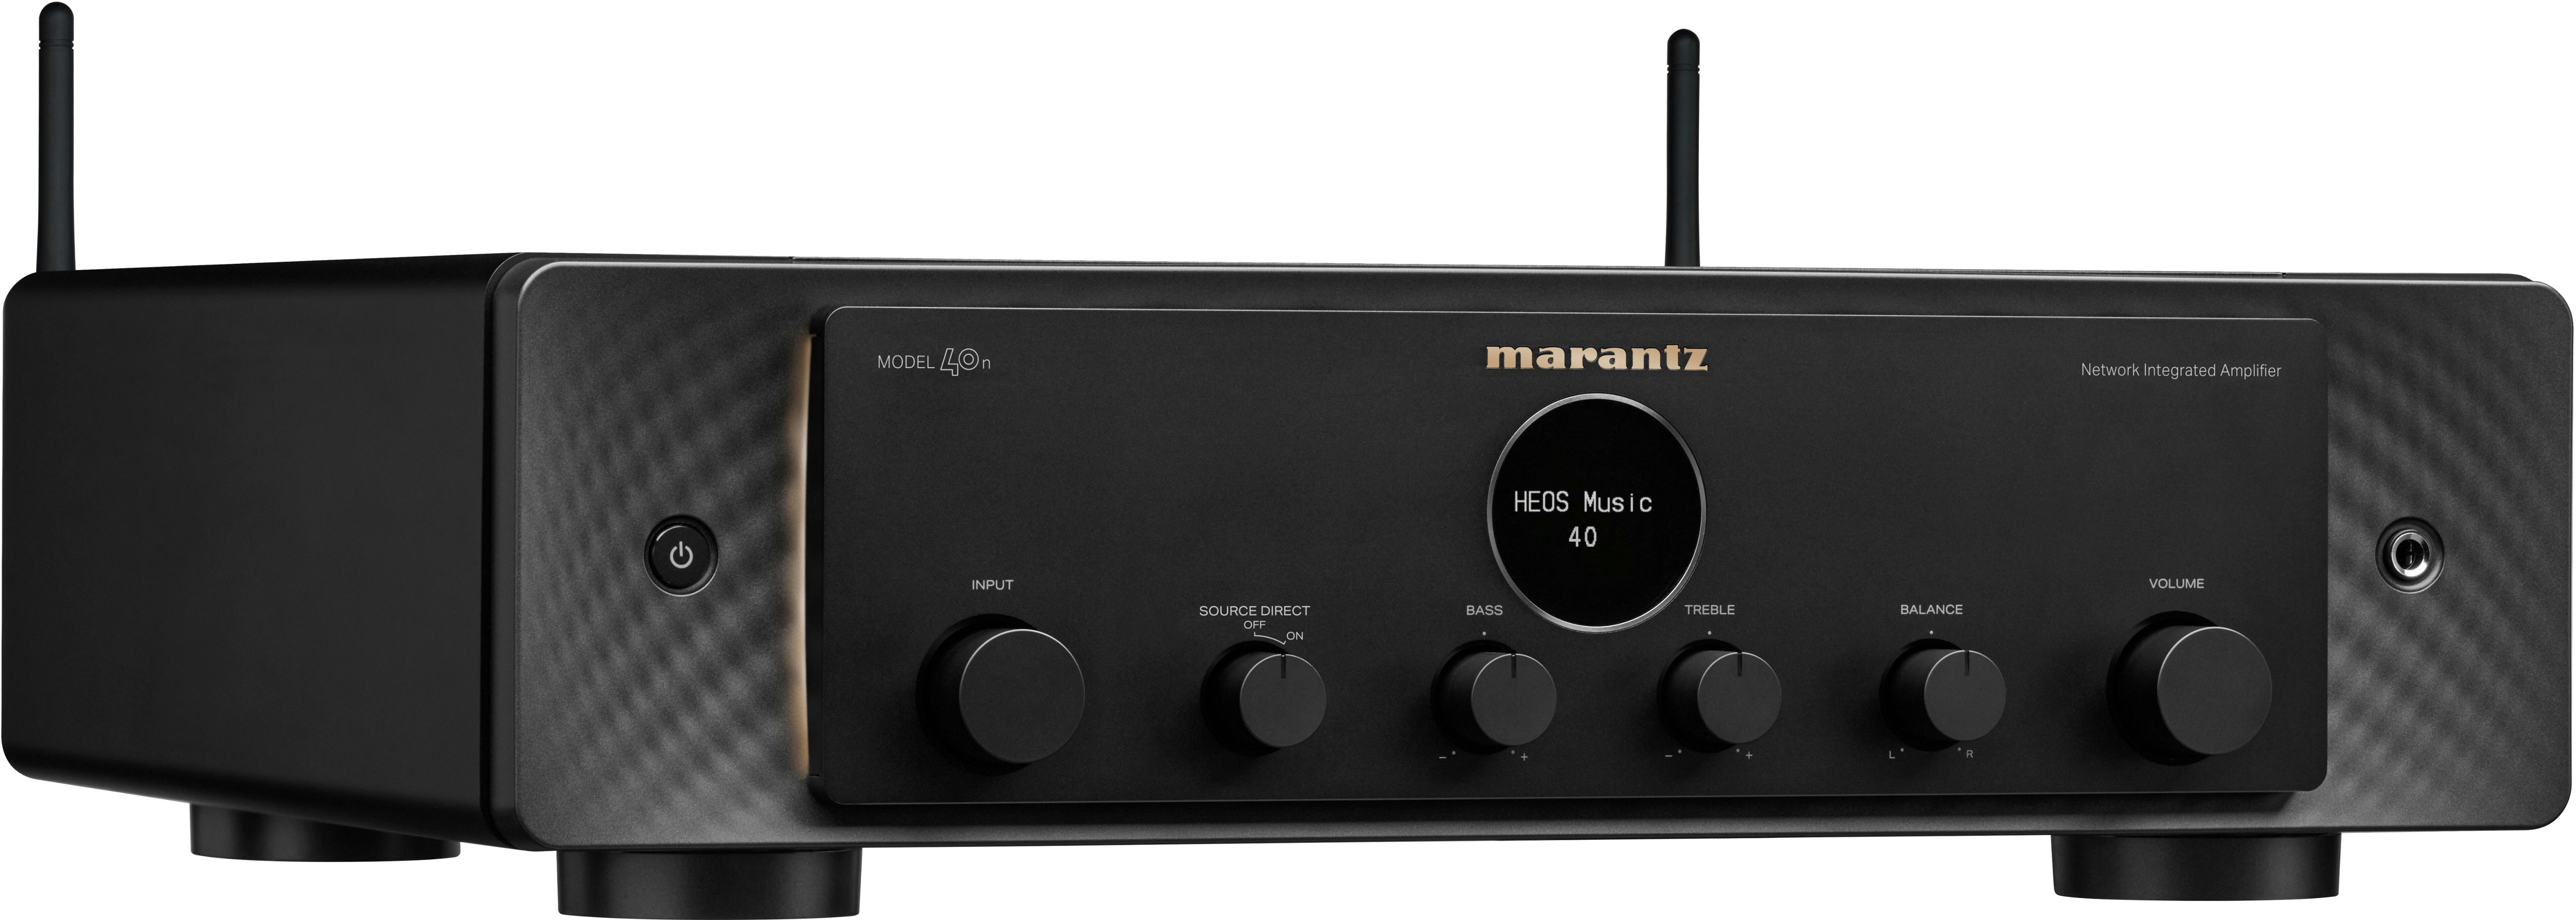 Marantz Model 40n integrated amplifier